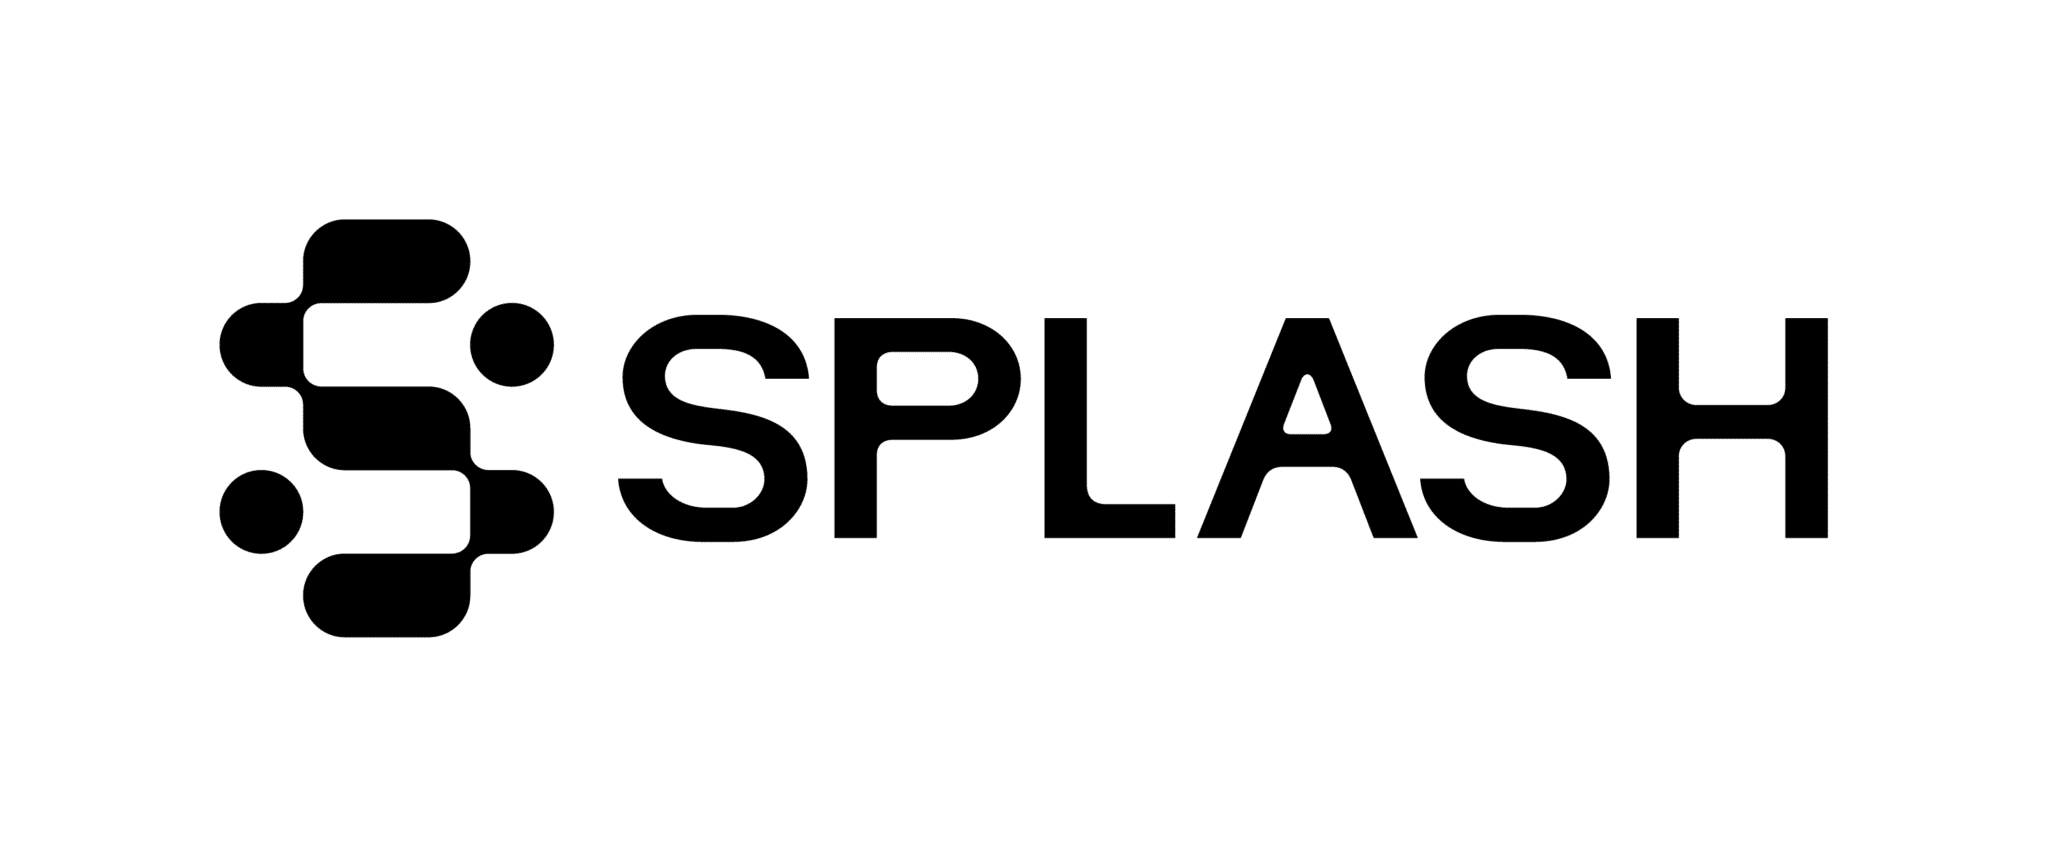 Lendkey comparison: Splash Financial